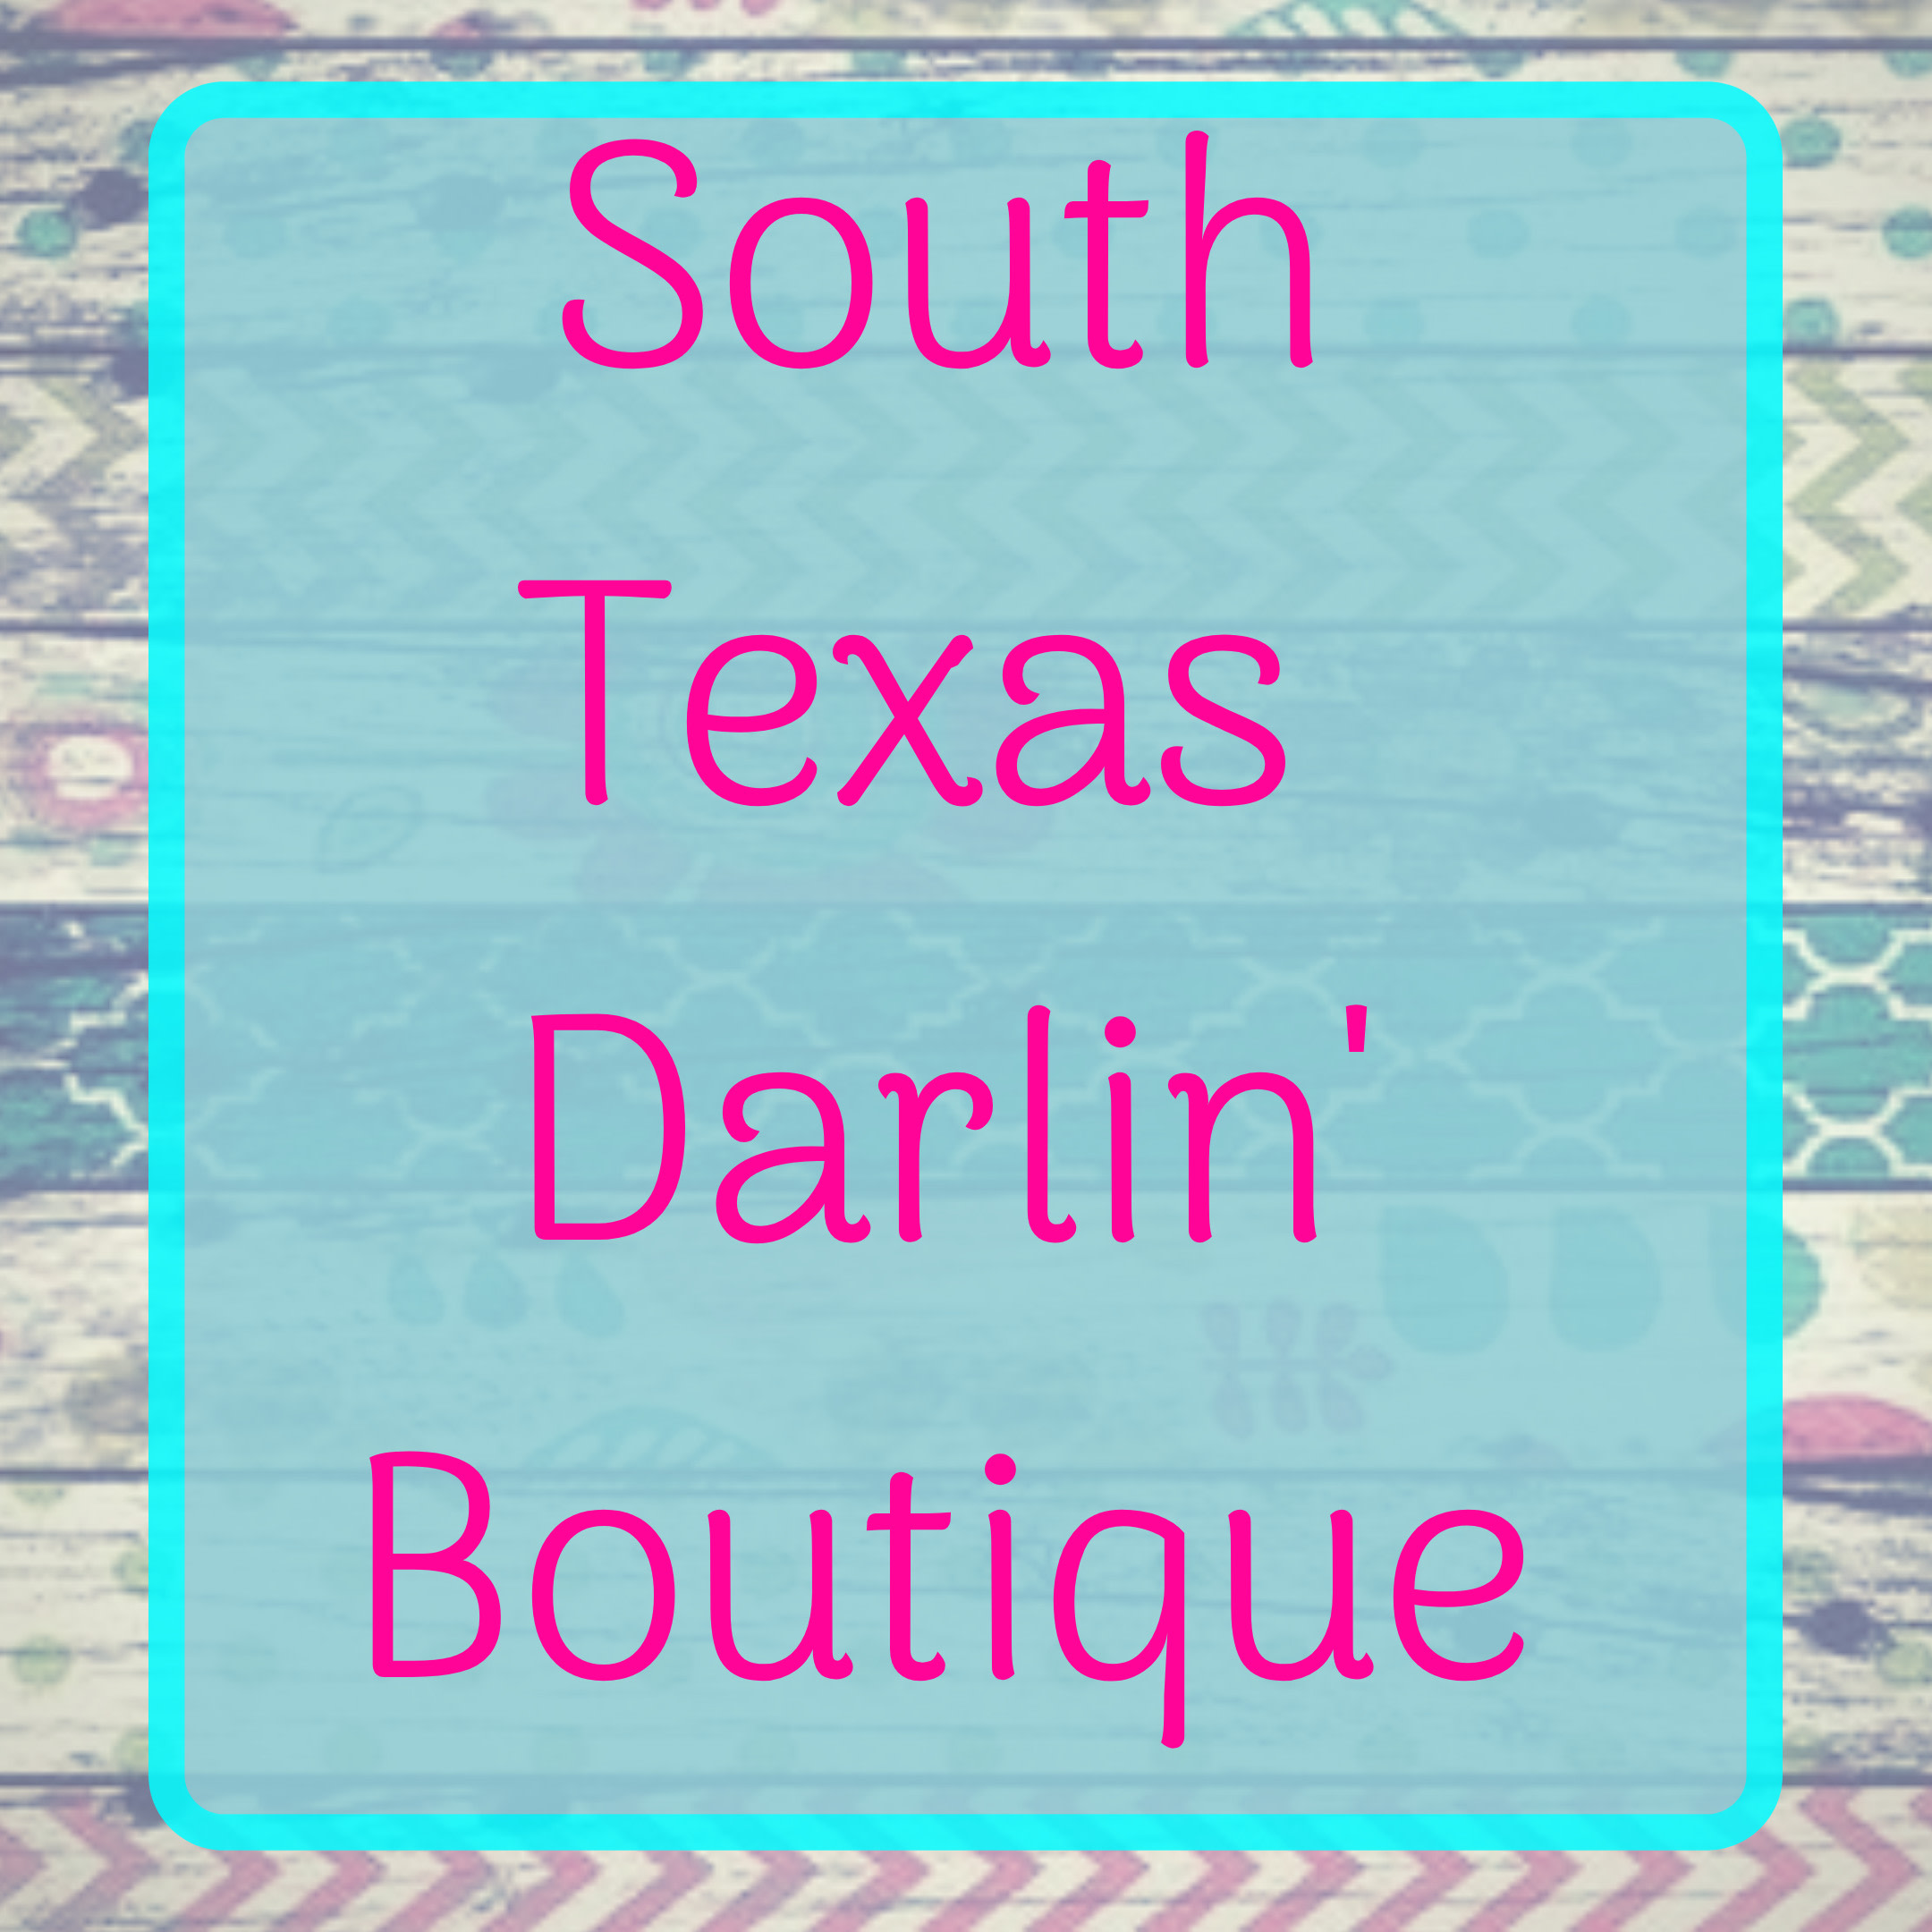 South Texas Darlin' Boutique